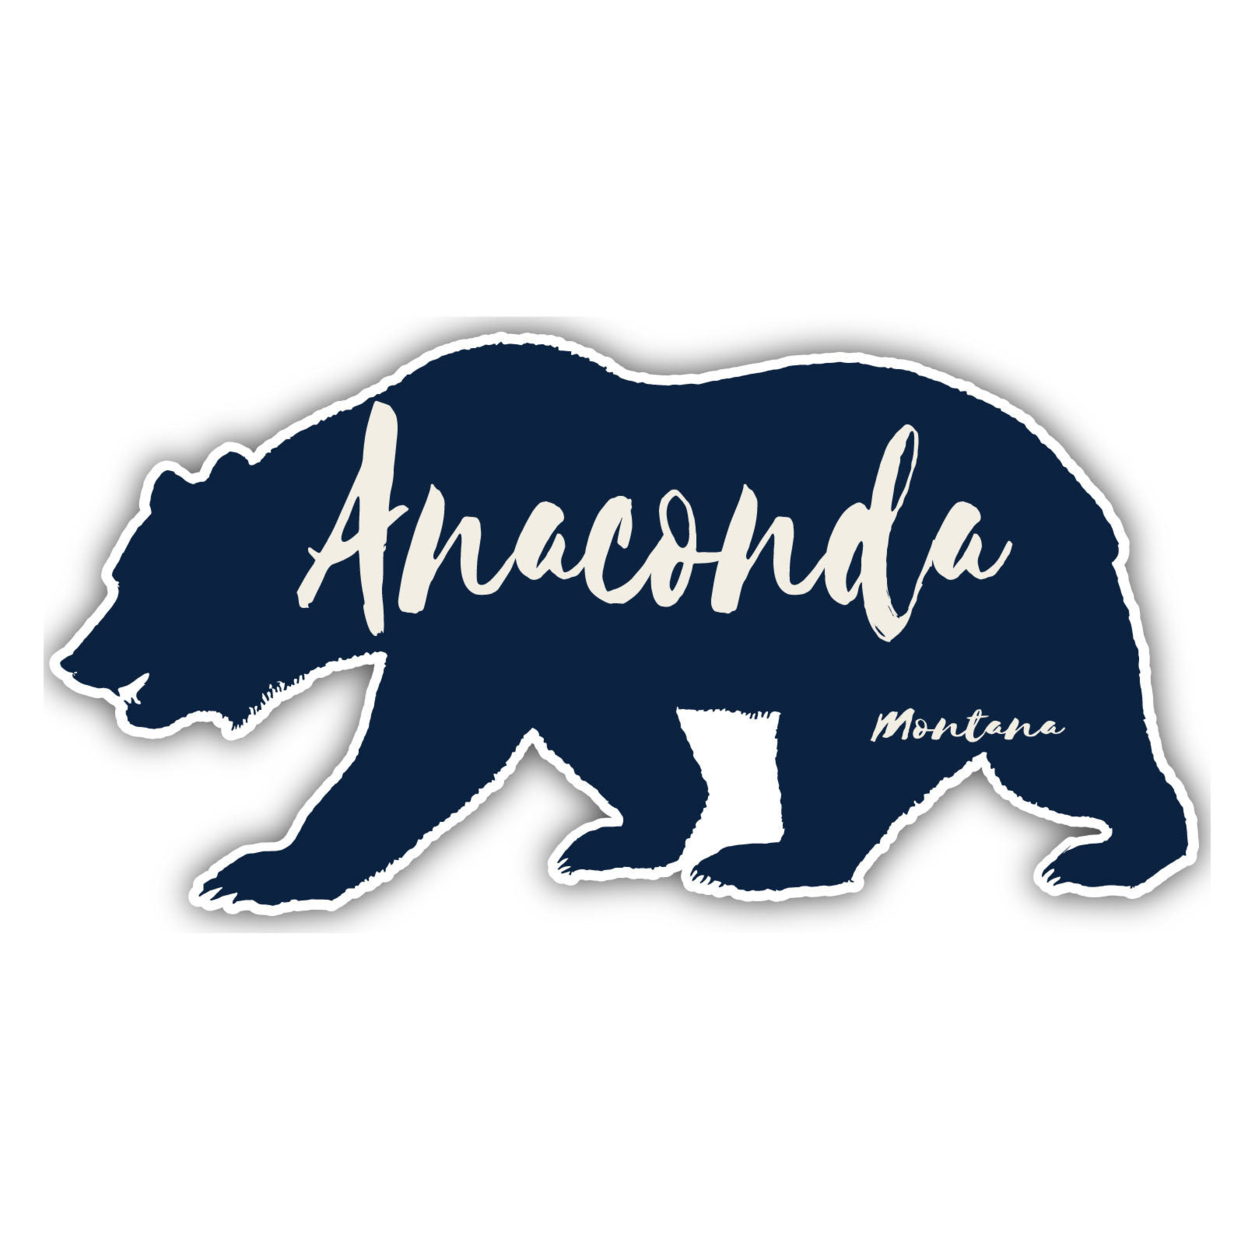 Anaconda Montana Souvenir Decorative Stickers (Choose Theme And Size) - 4-Pack, 8-Inch, Bear